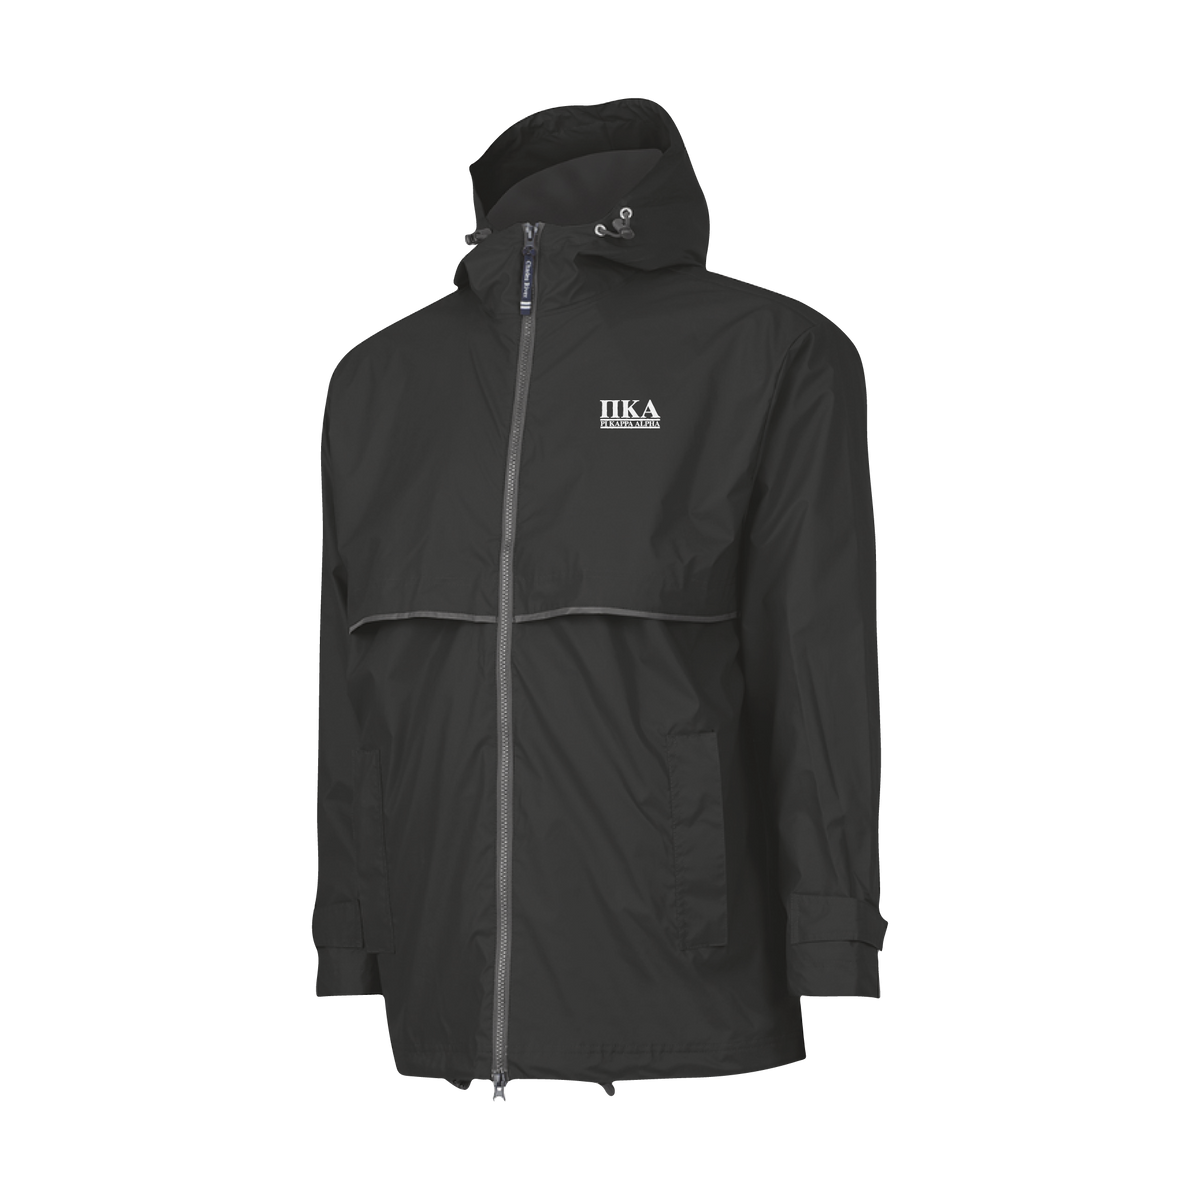 B-Unlimited Greek - Rain Jacket (PIKE) - Charles River - 9199 - New Englander Rain Jacket - Black